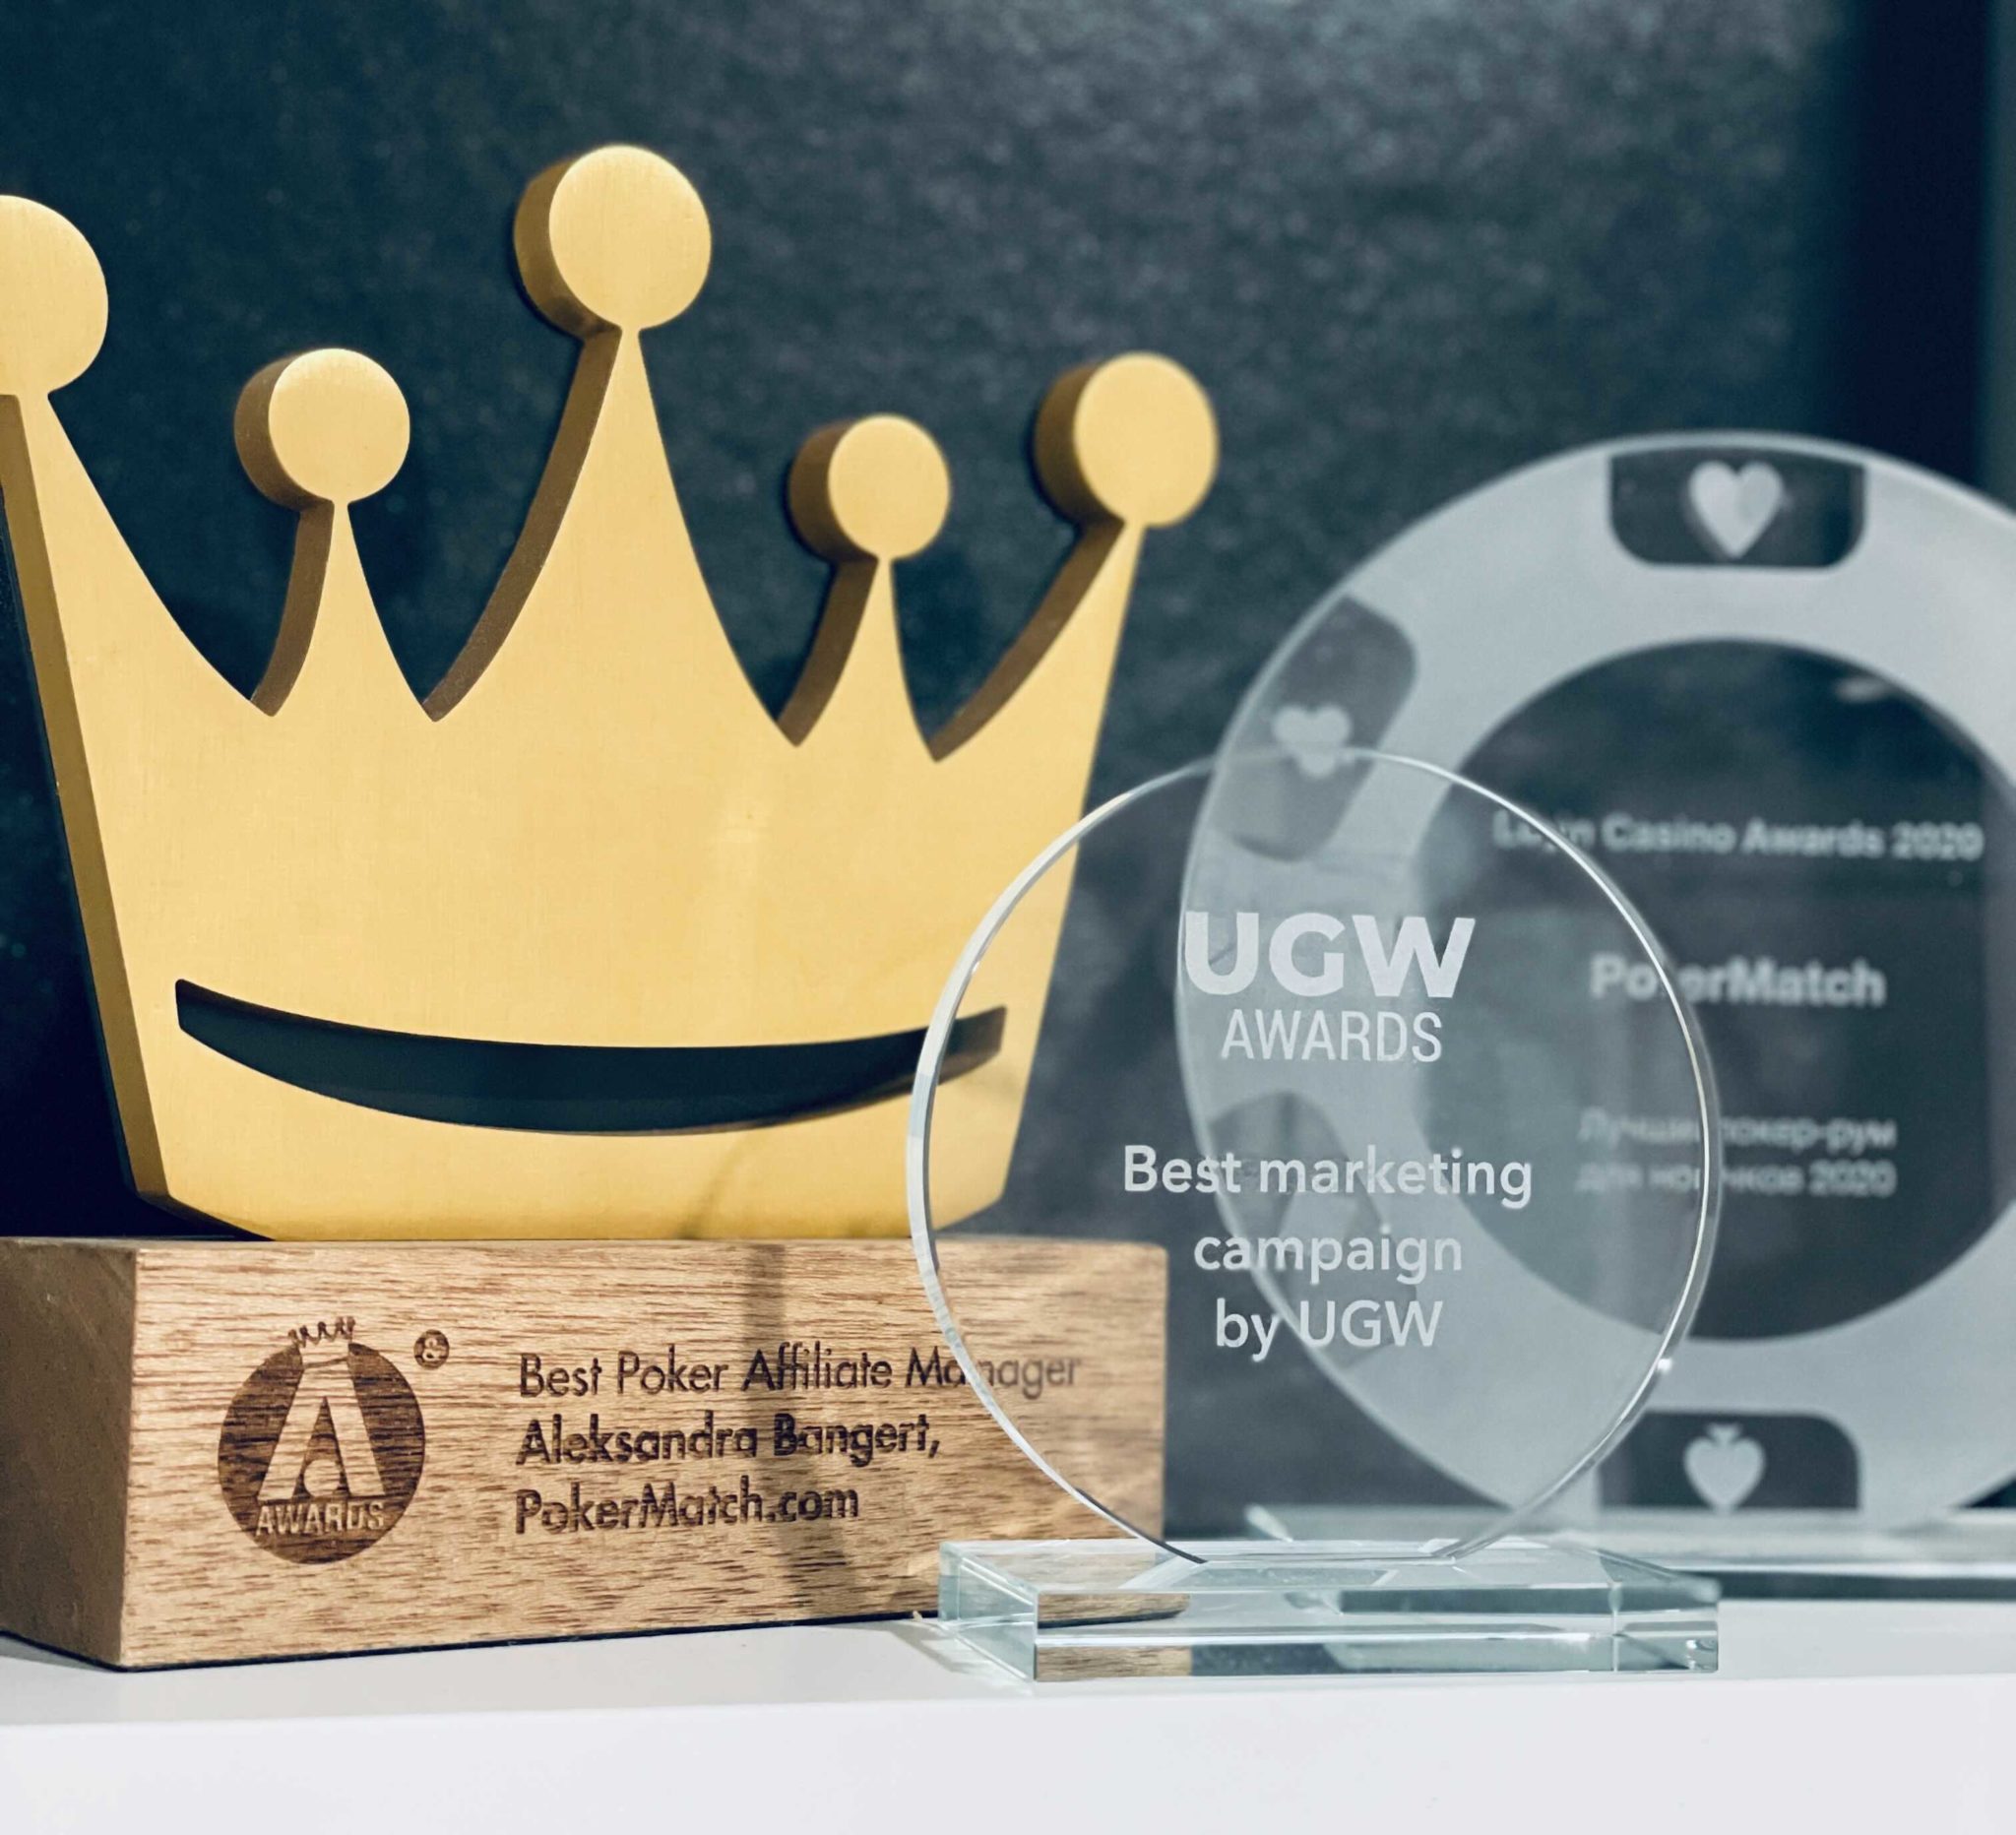 PokerMatch wins Best Marketing Campaign at UGW Awards